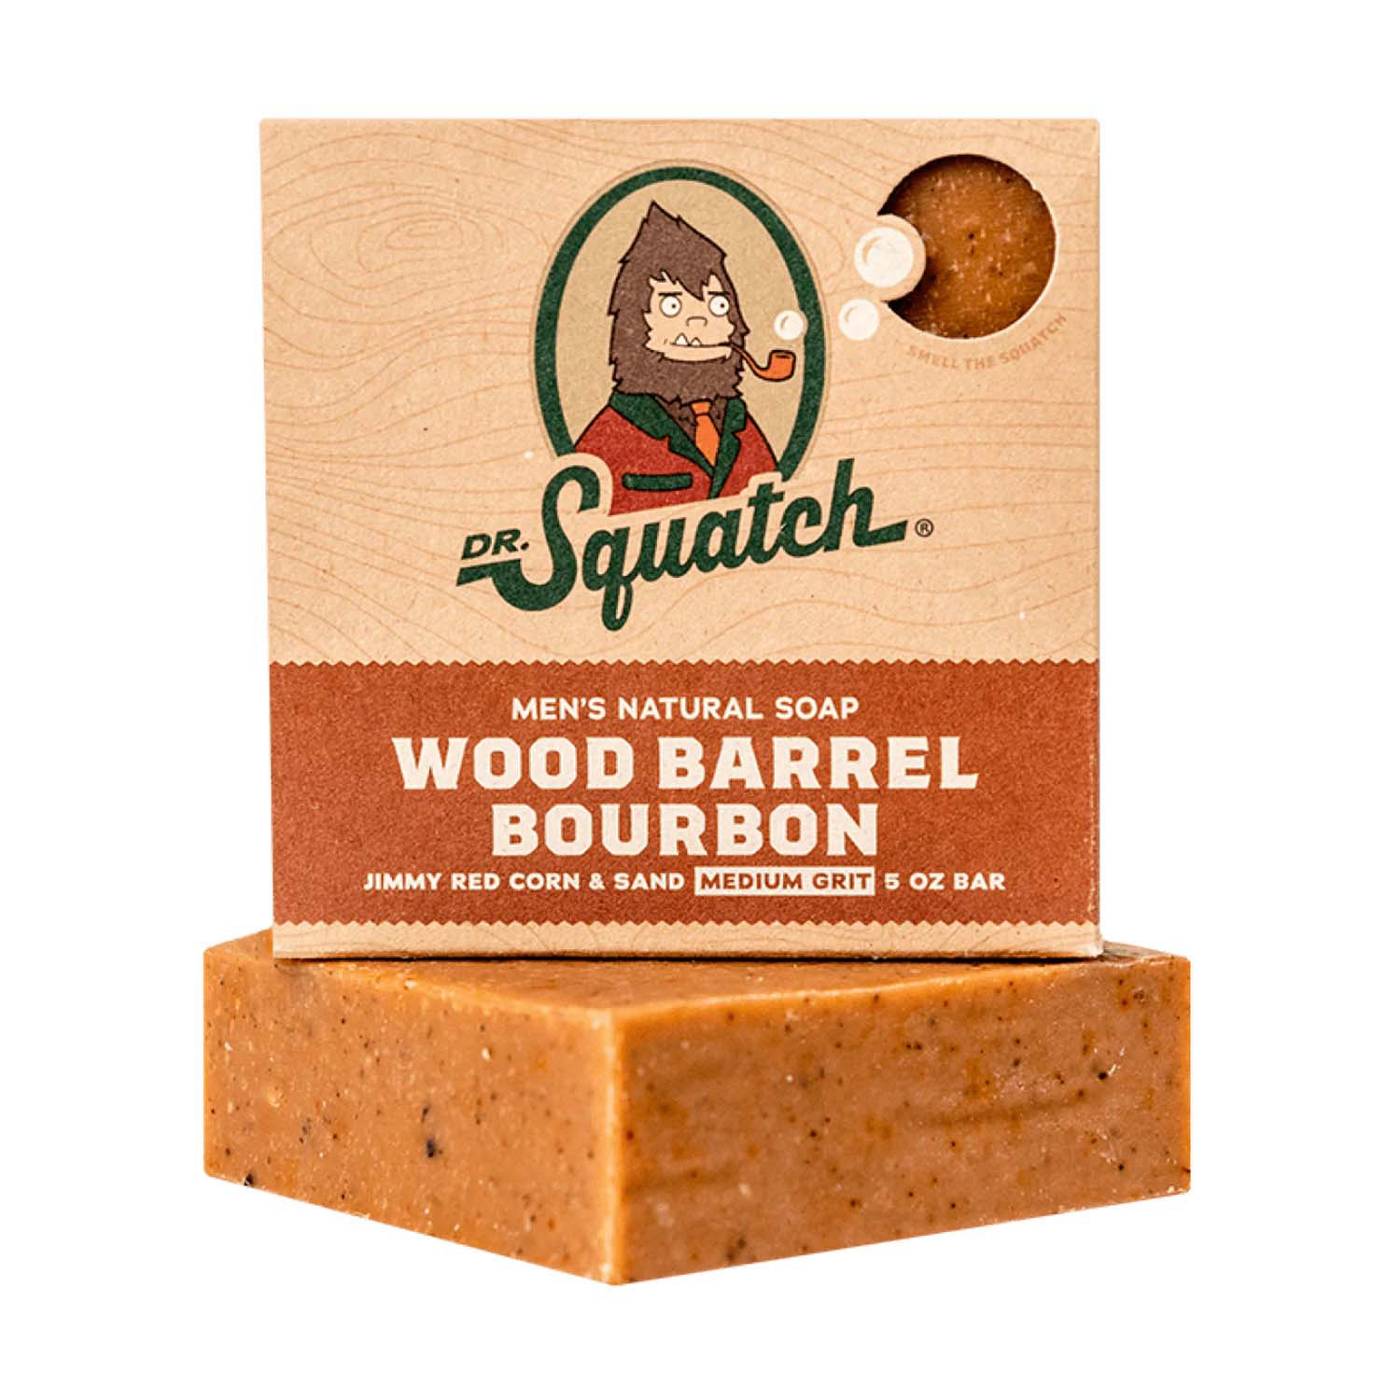 Dr. Squatch Men's Natural Soap Bar - Wood Barrel Bourbon; image 2 of 7